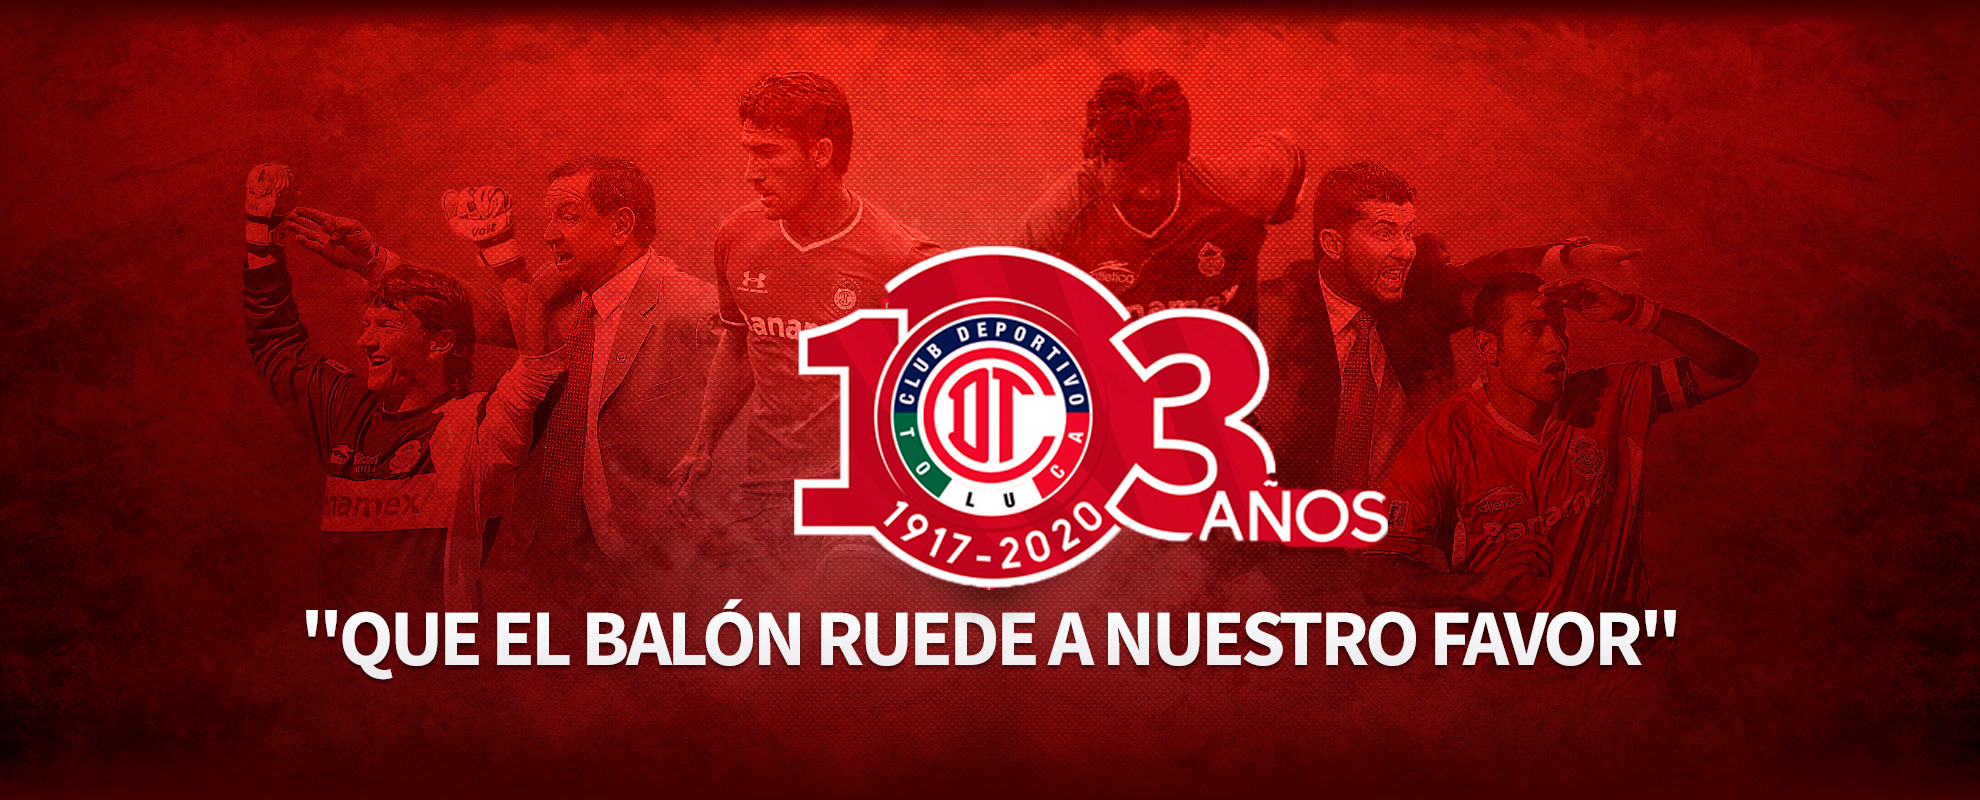 Club Deportivo Toluca 103 años